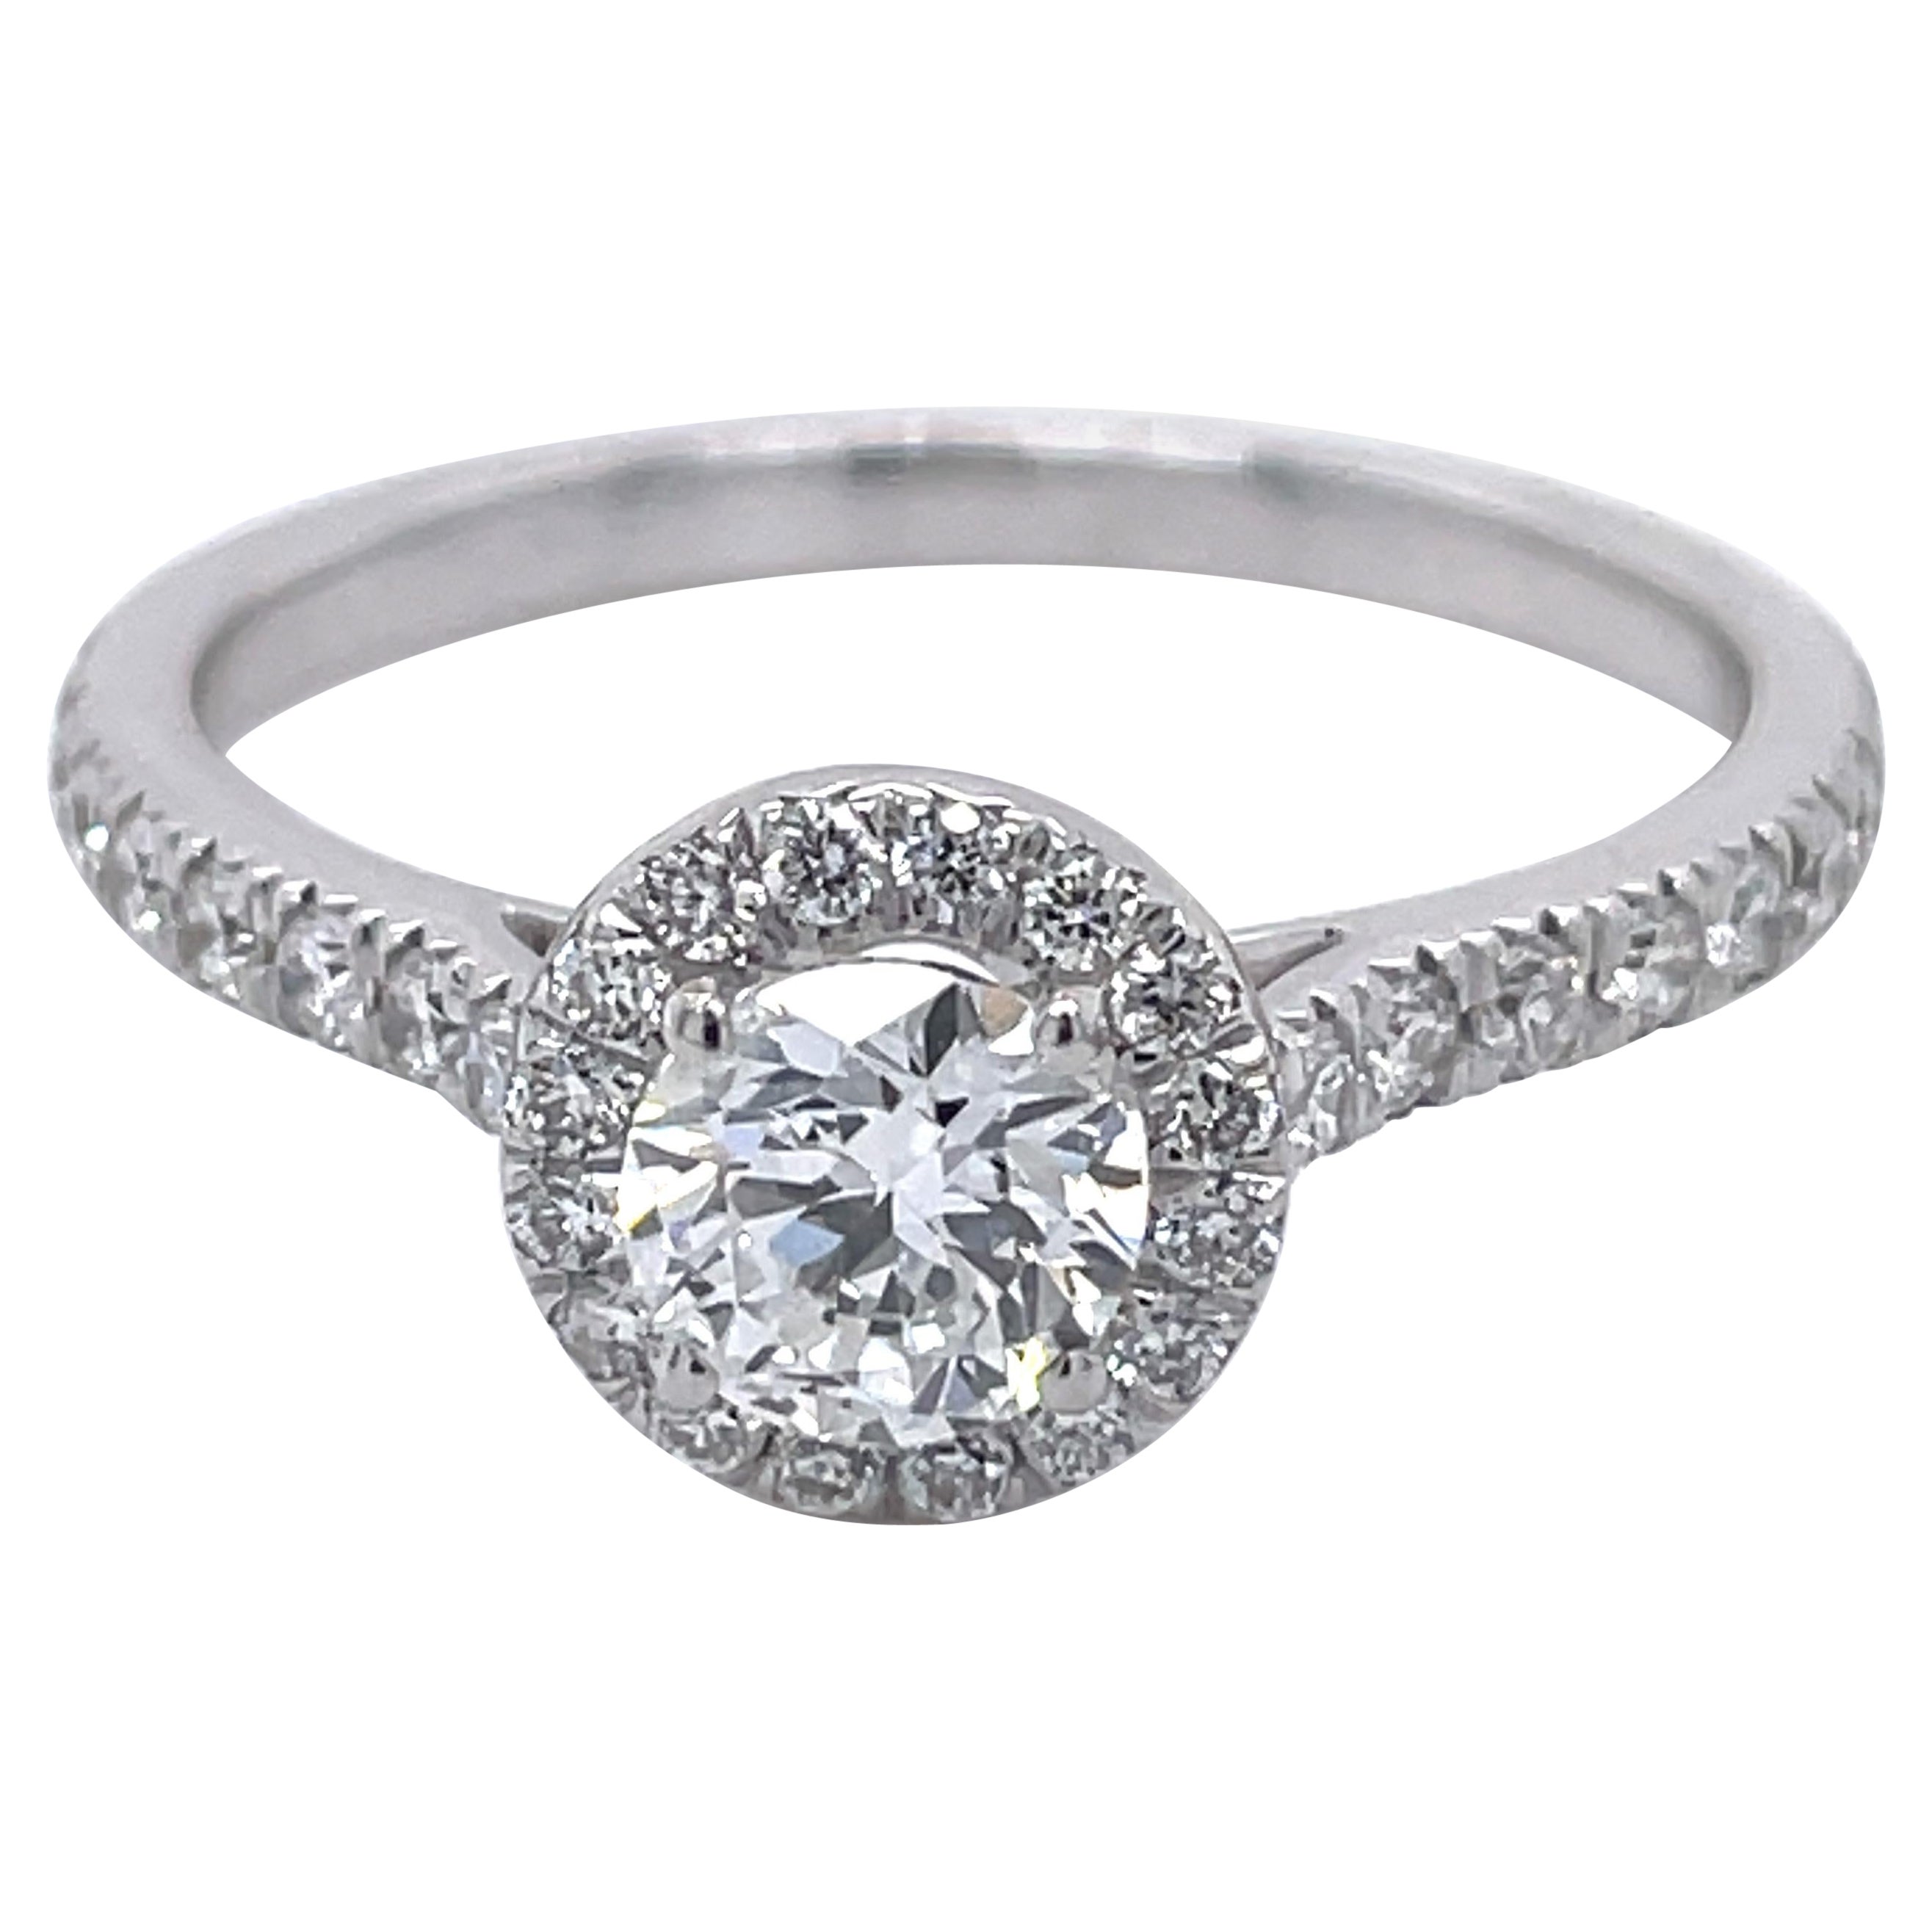 Classic engagement ring, 1ct diamond emdagement ring, 14K white goldm minimalist